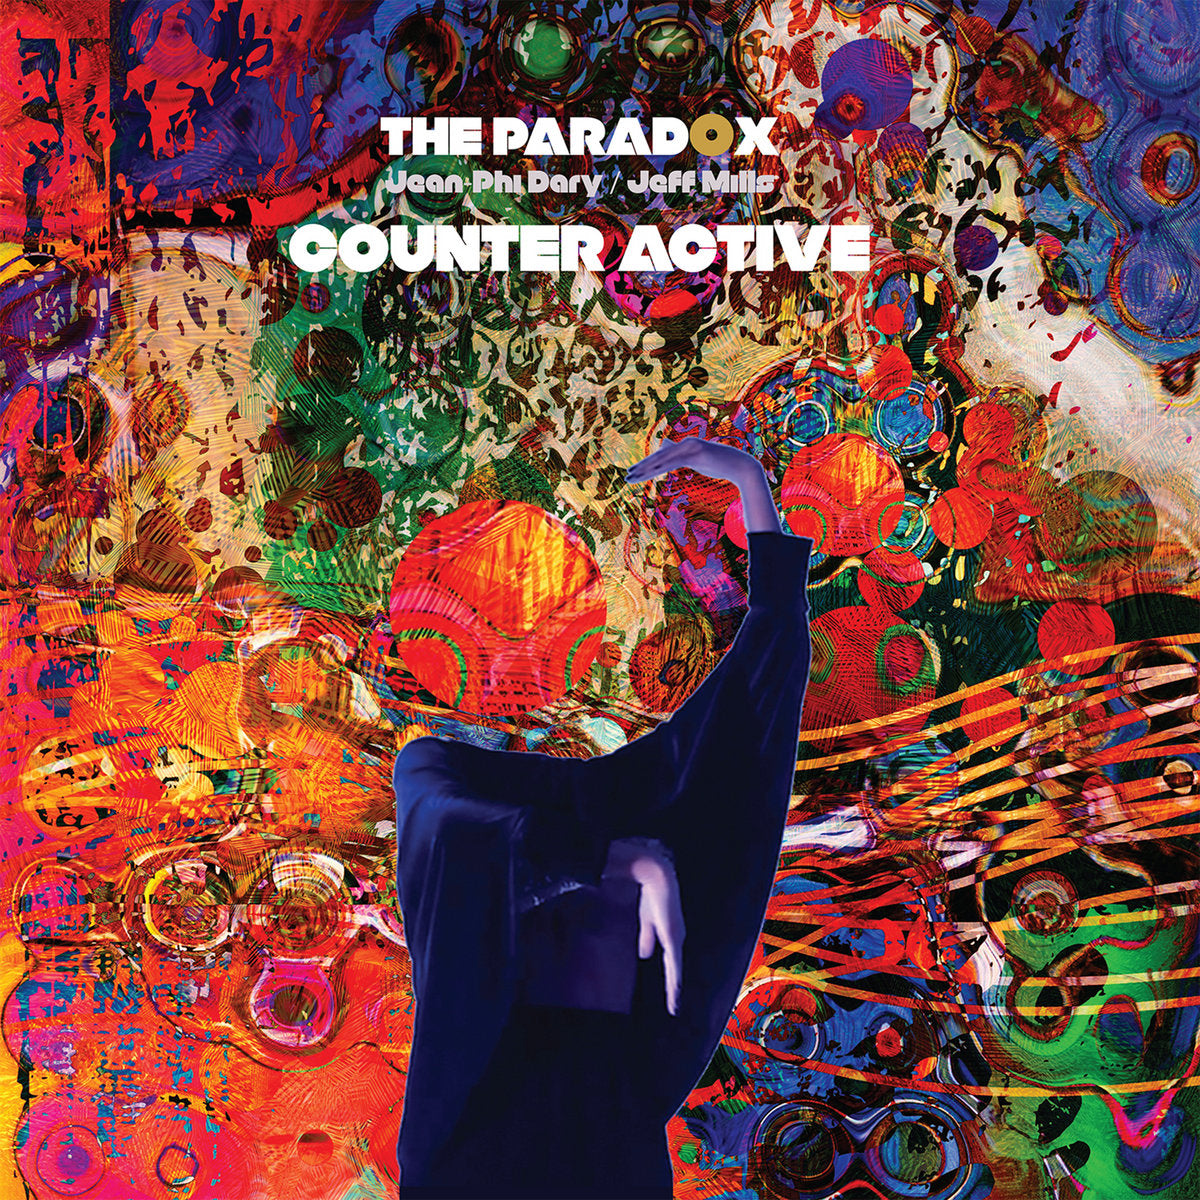 THE PARADOX (JEAN-PHI DARY / JEFF MILLS) - Counter Active - 2LP - Vinyl